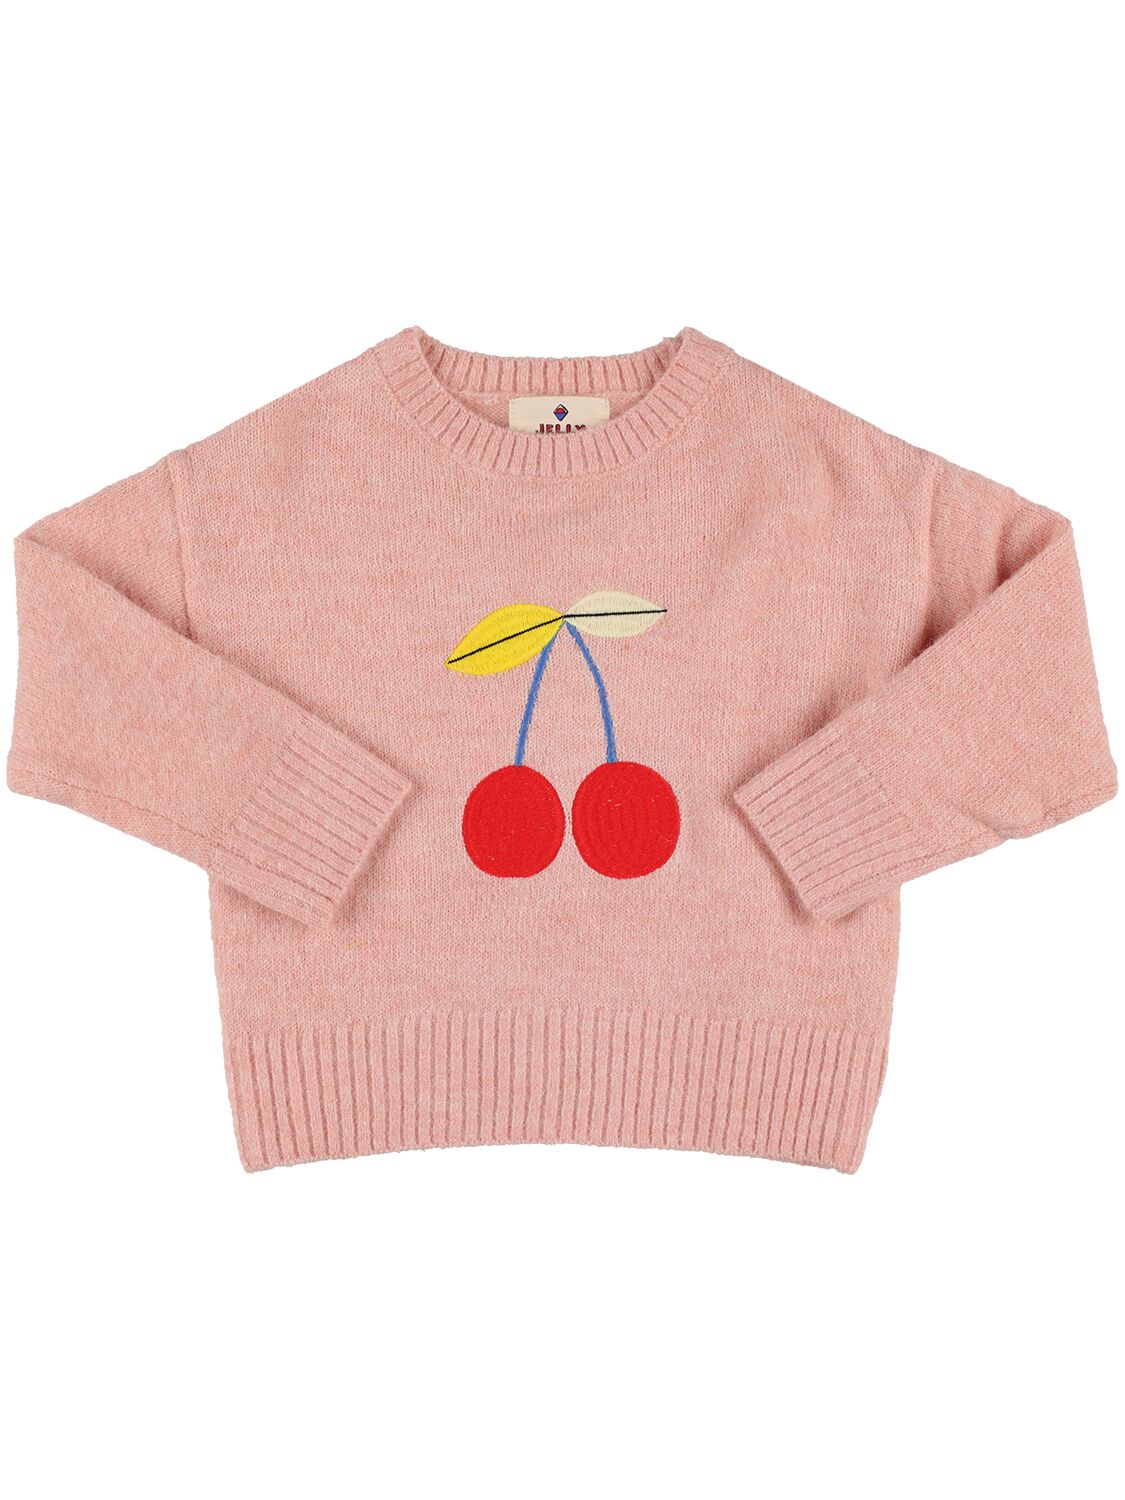 Image of Cherry Intarsia Wool Blend Sweater